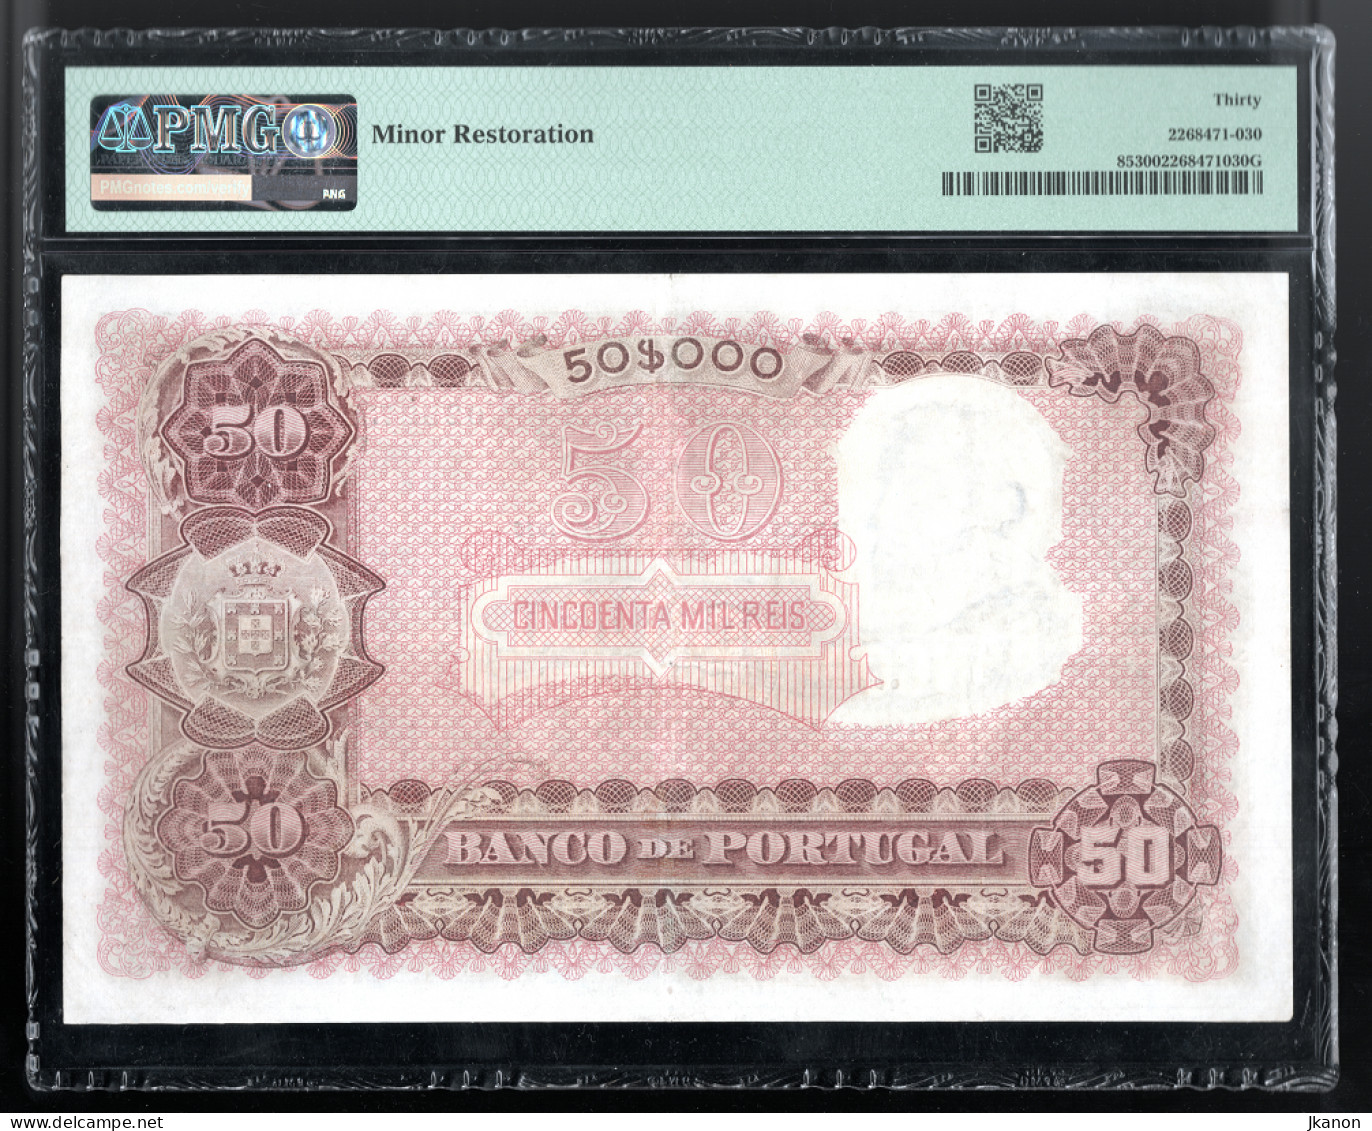 Portugal Banco De Portugal 50 Mil Reis 1910, PMG 30, Pick 85, Rare - Portugal